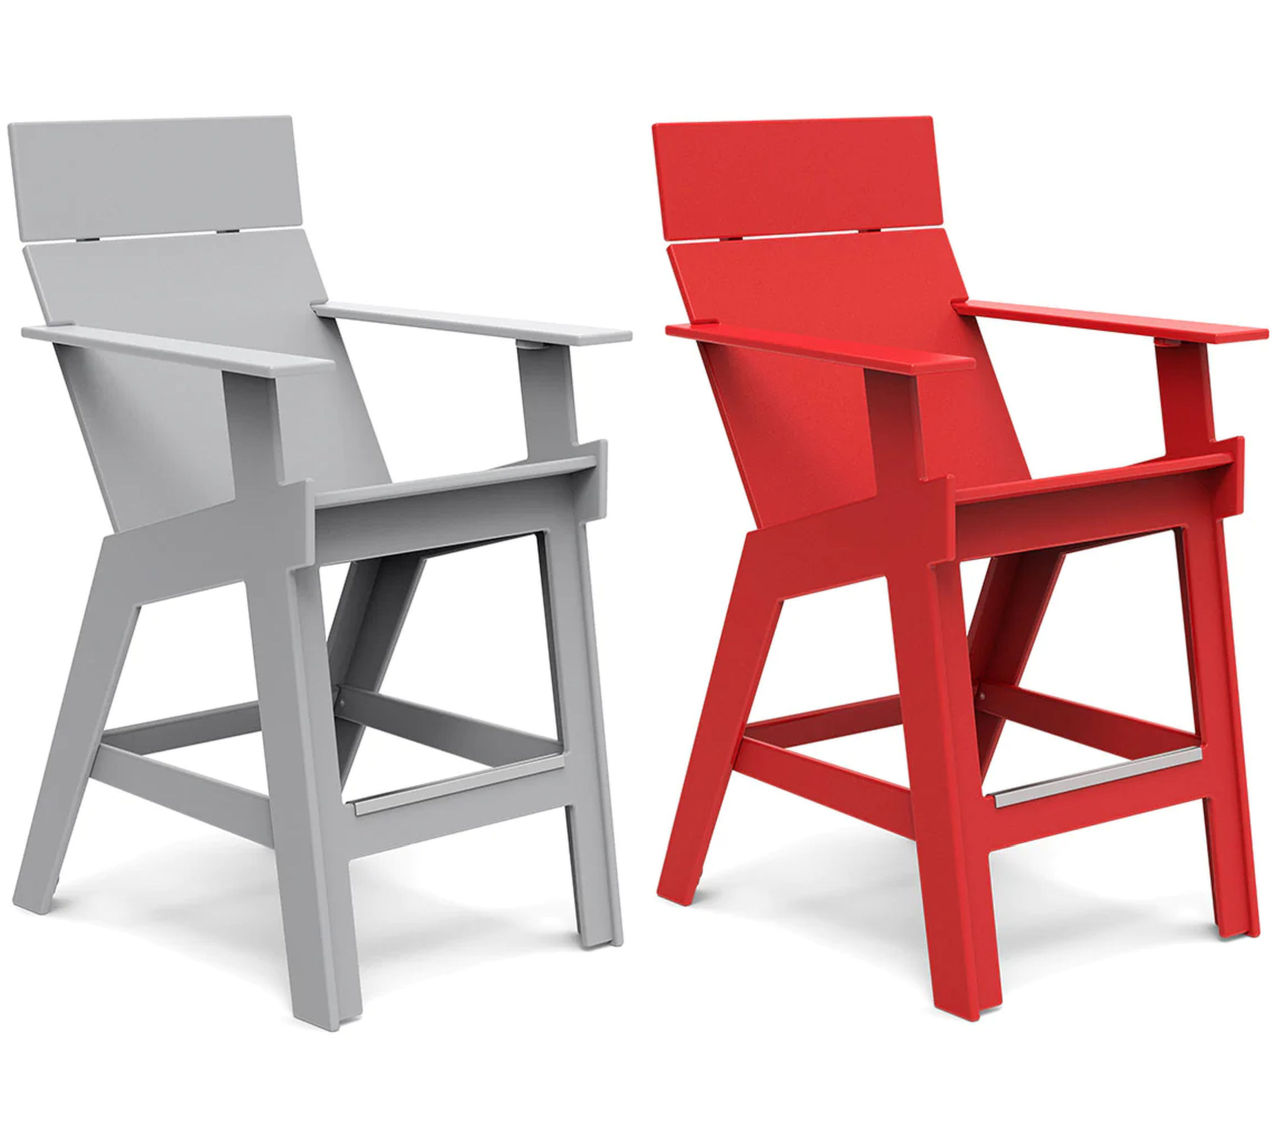 Lollygagger Hi-Rise Chair Modular Design-Color variant 1